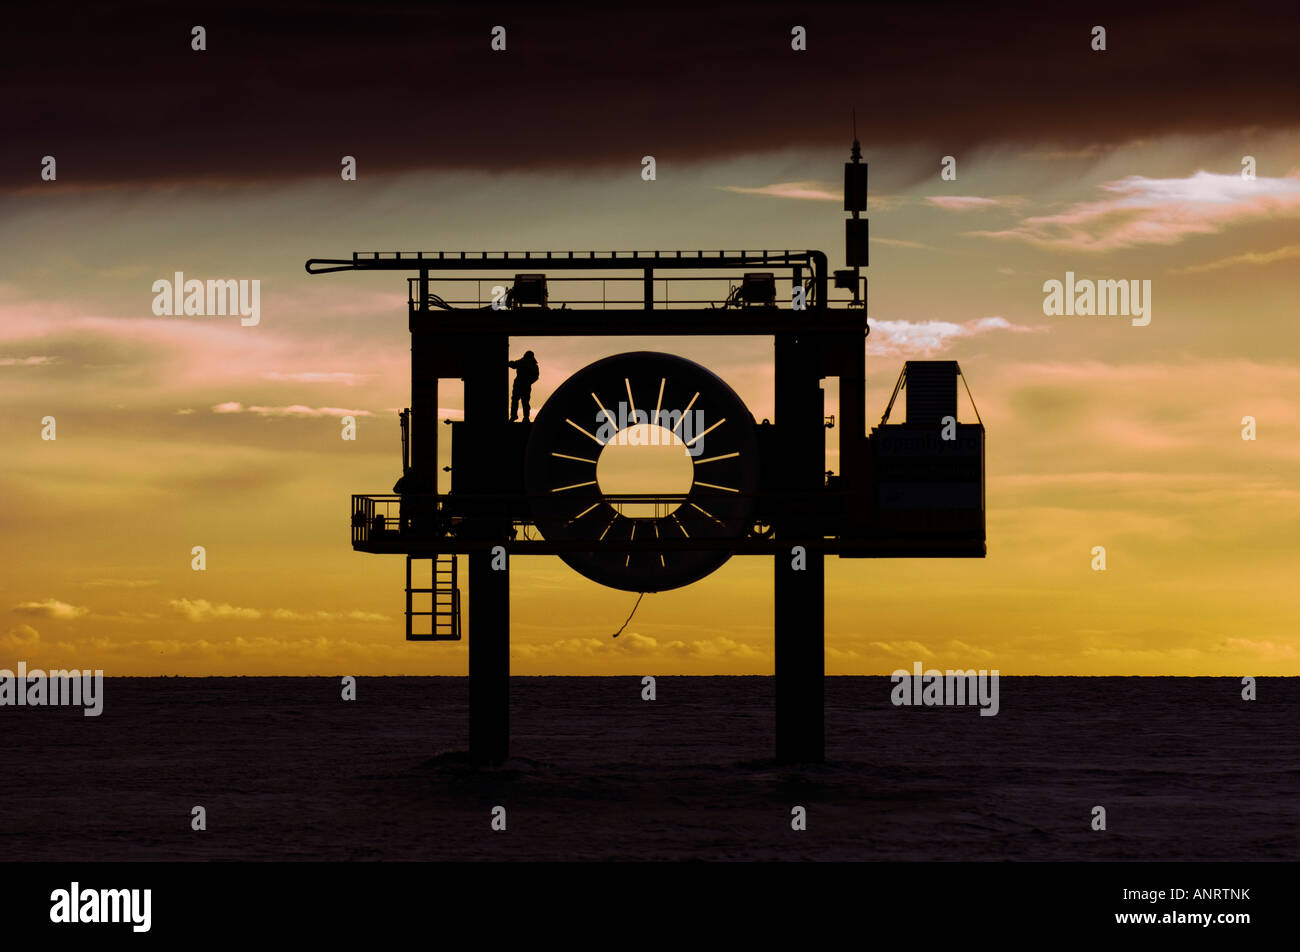 Tidal turbine power generator at sunset Stock Photo